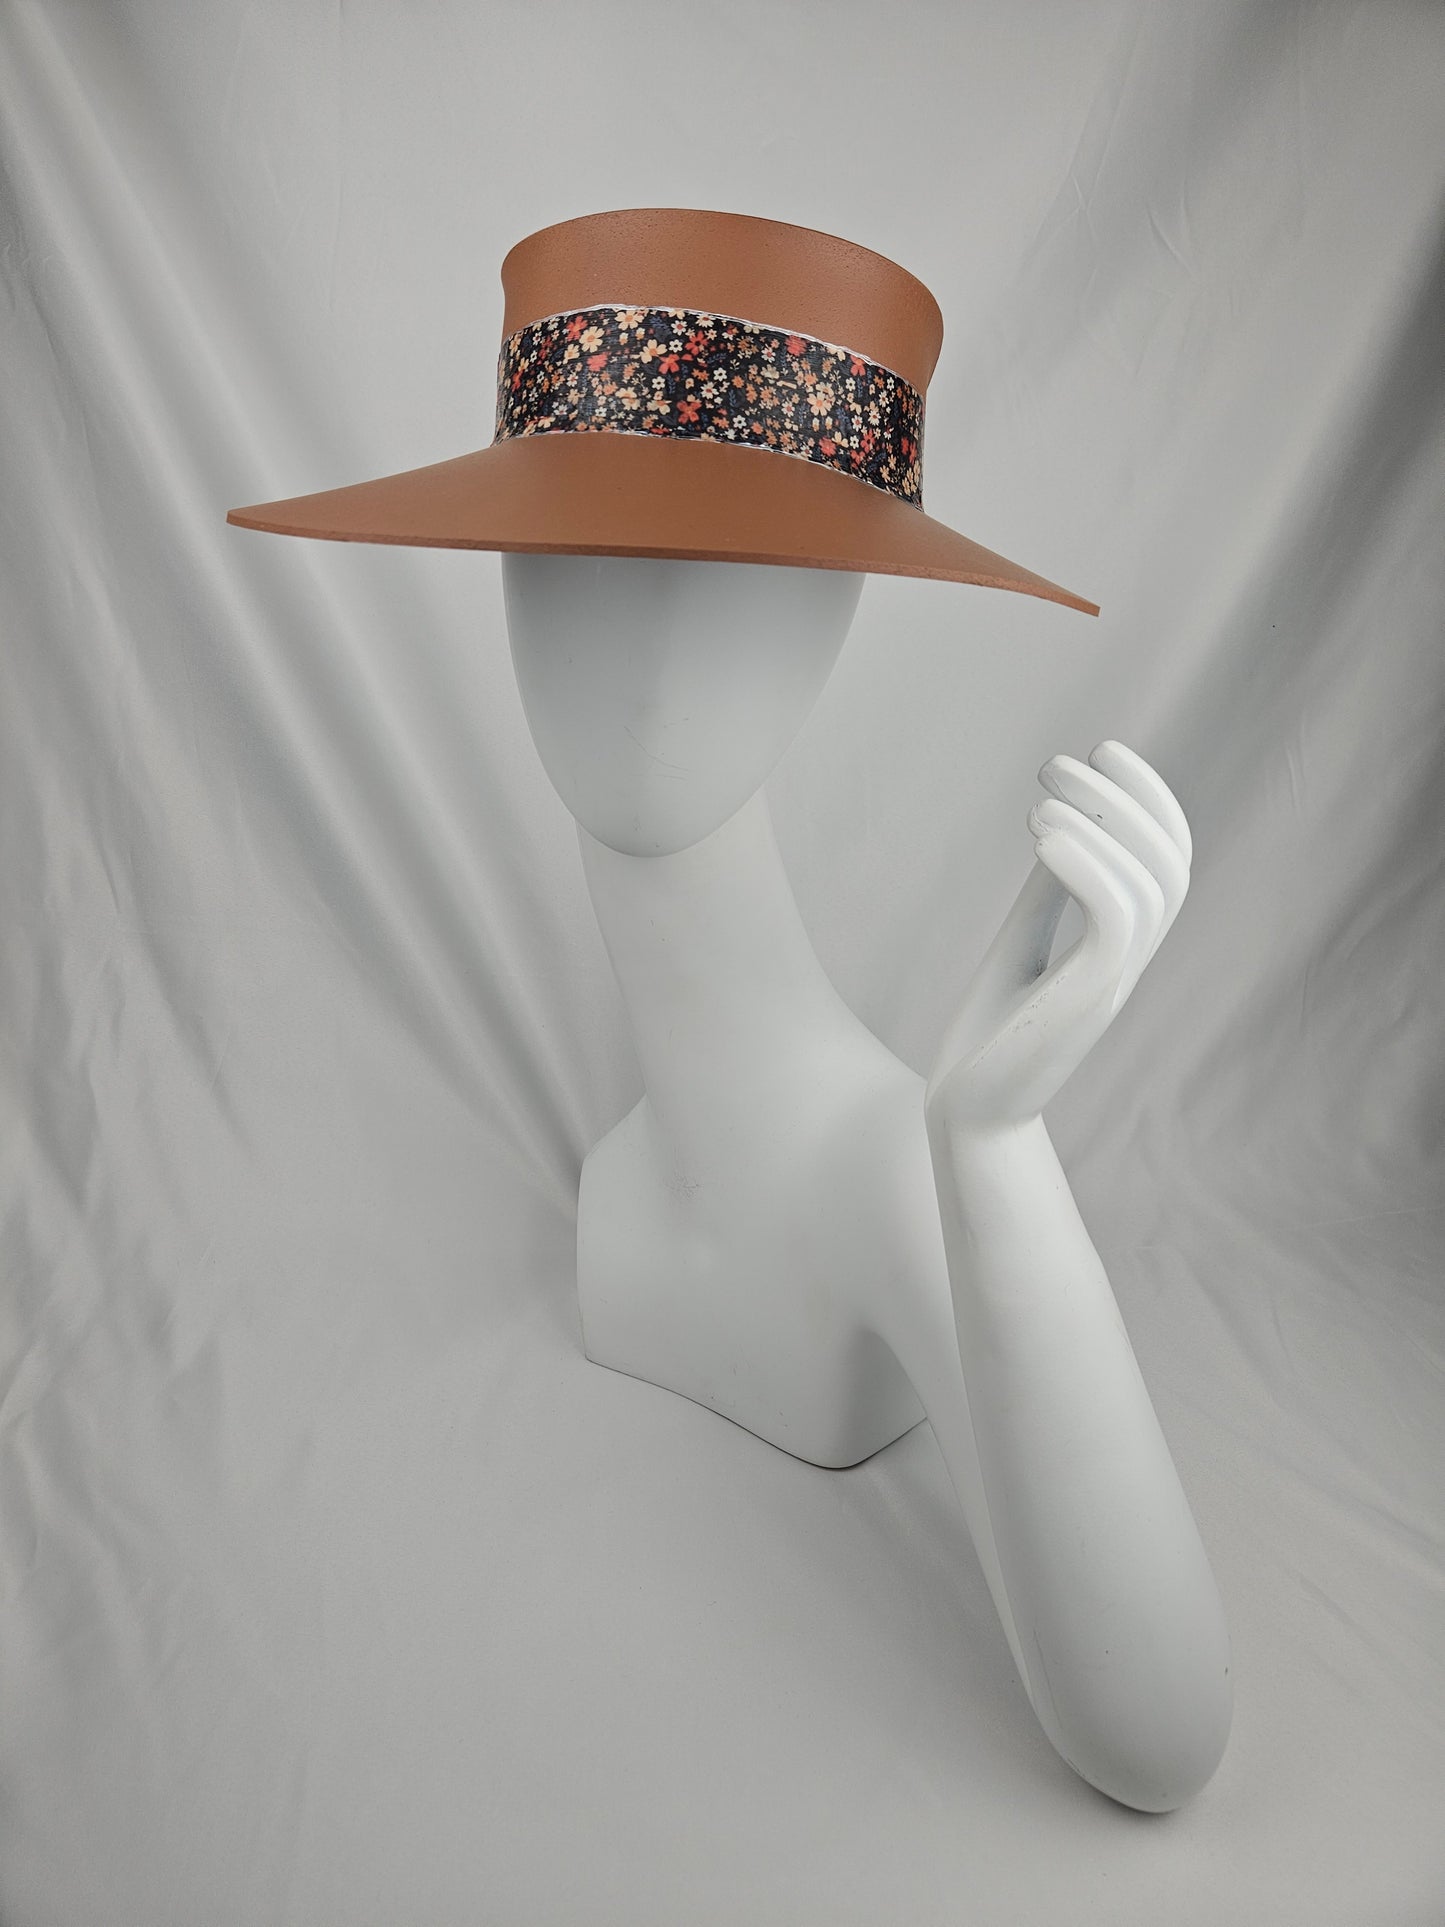 Tall Caramel Brown Audrey Sun Visor Hat with Black Multicolored Floral Band: 1940s, Walks, Brunch, Tea, Golf, Wedding, Church, No Headache, Easter, Pool, Beach, Big Brim